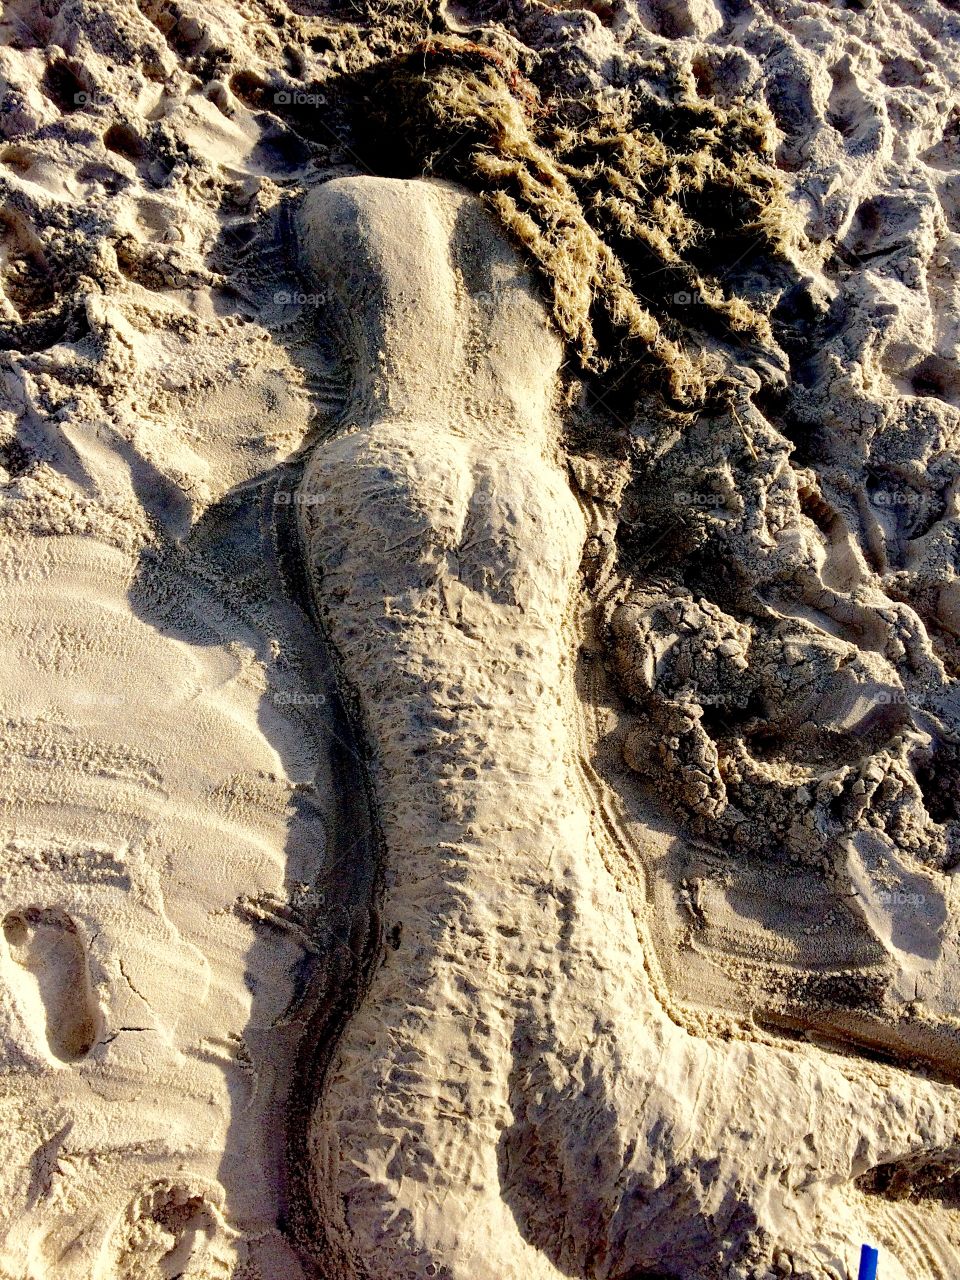 Mermaid in the sand